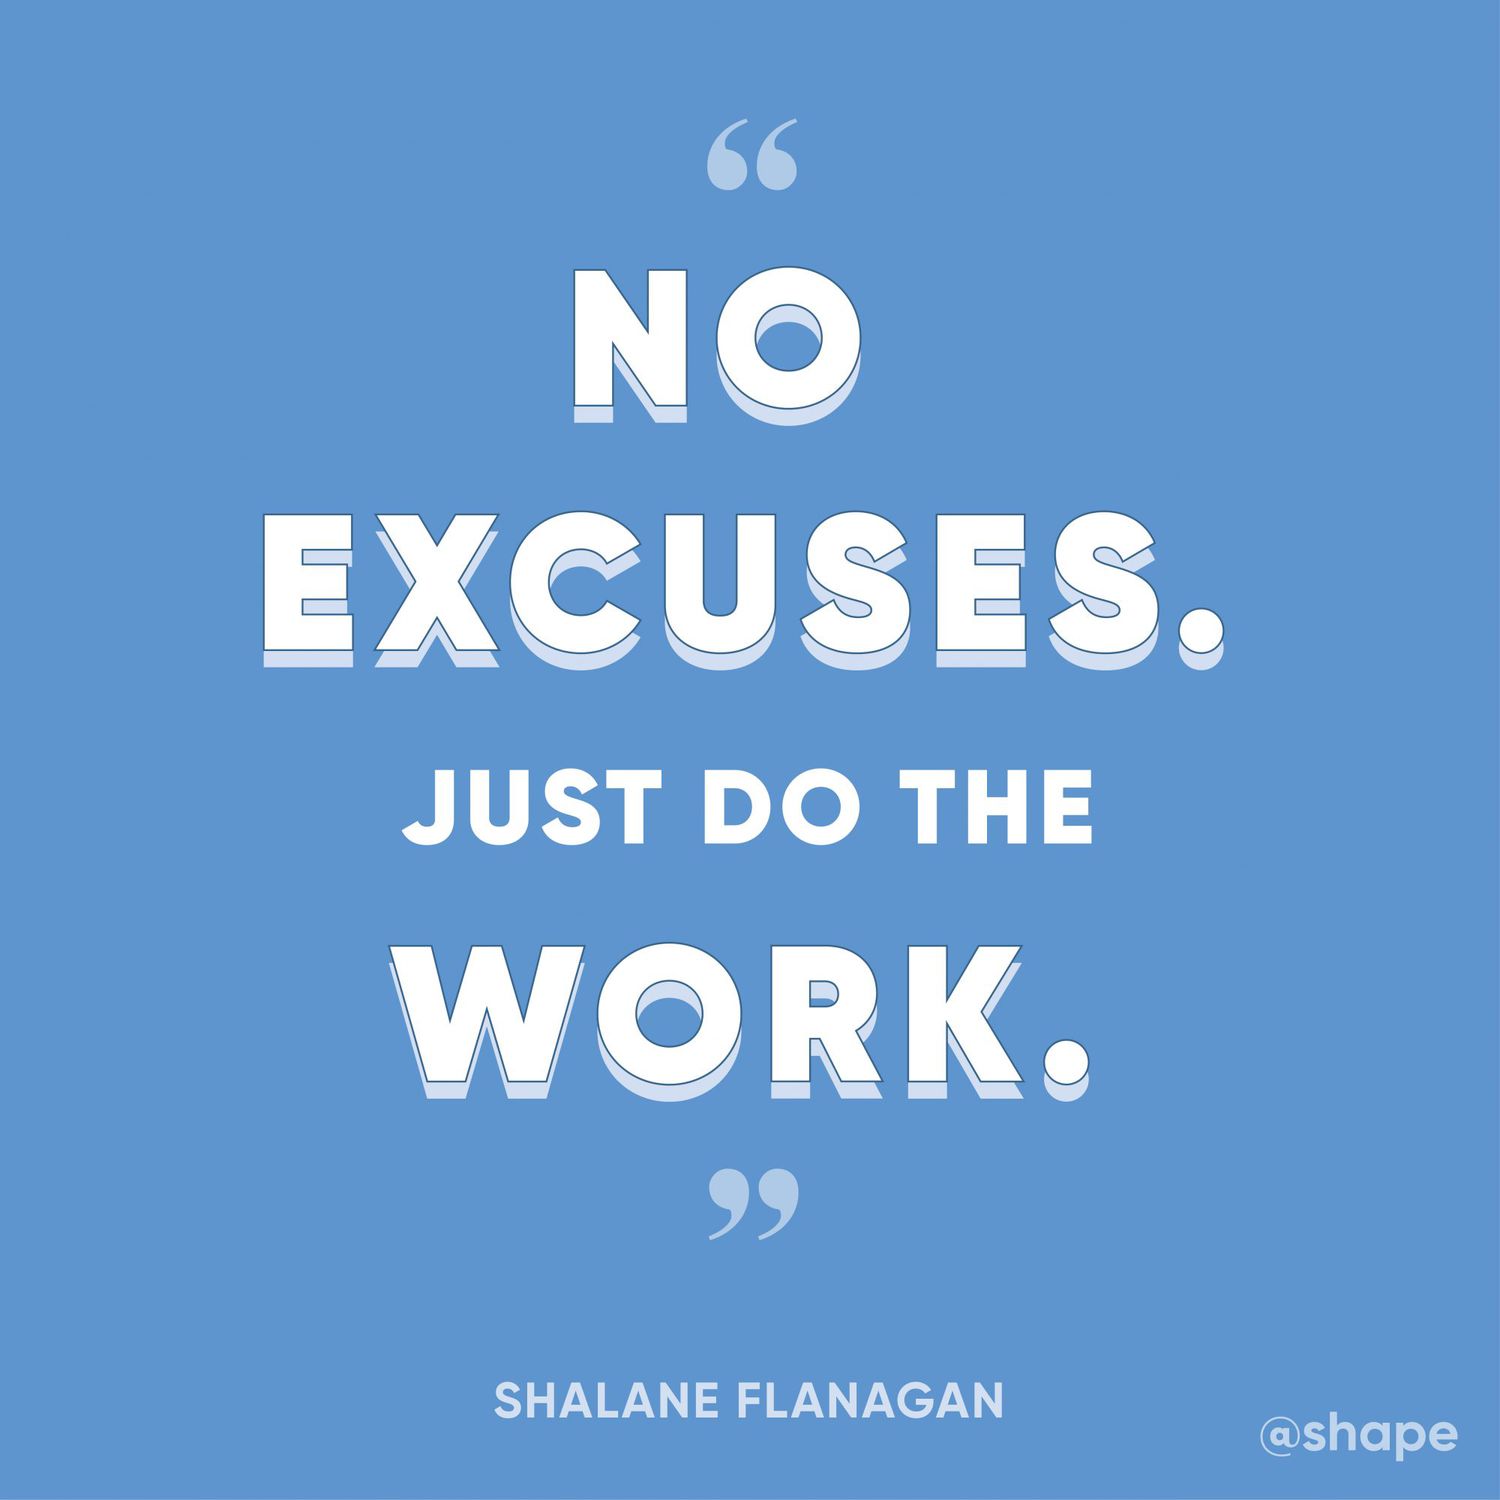 Shalane Flanagan workout quote